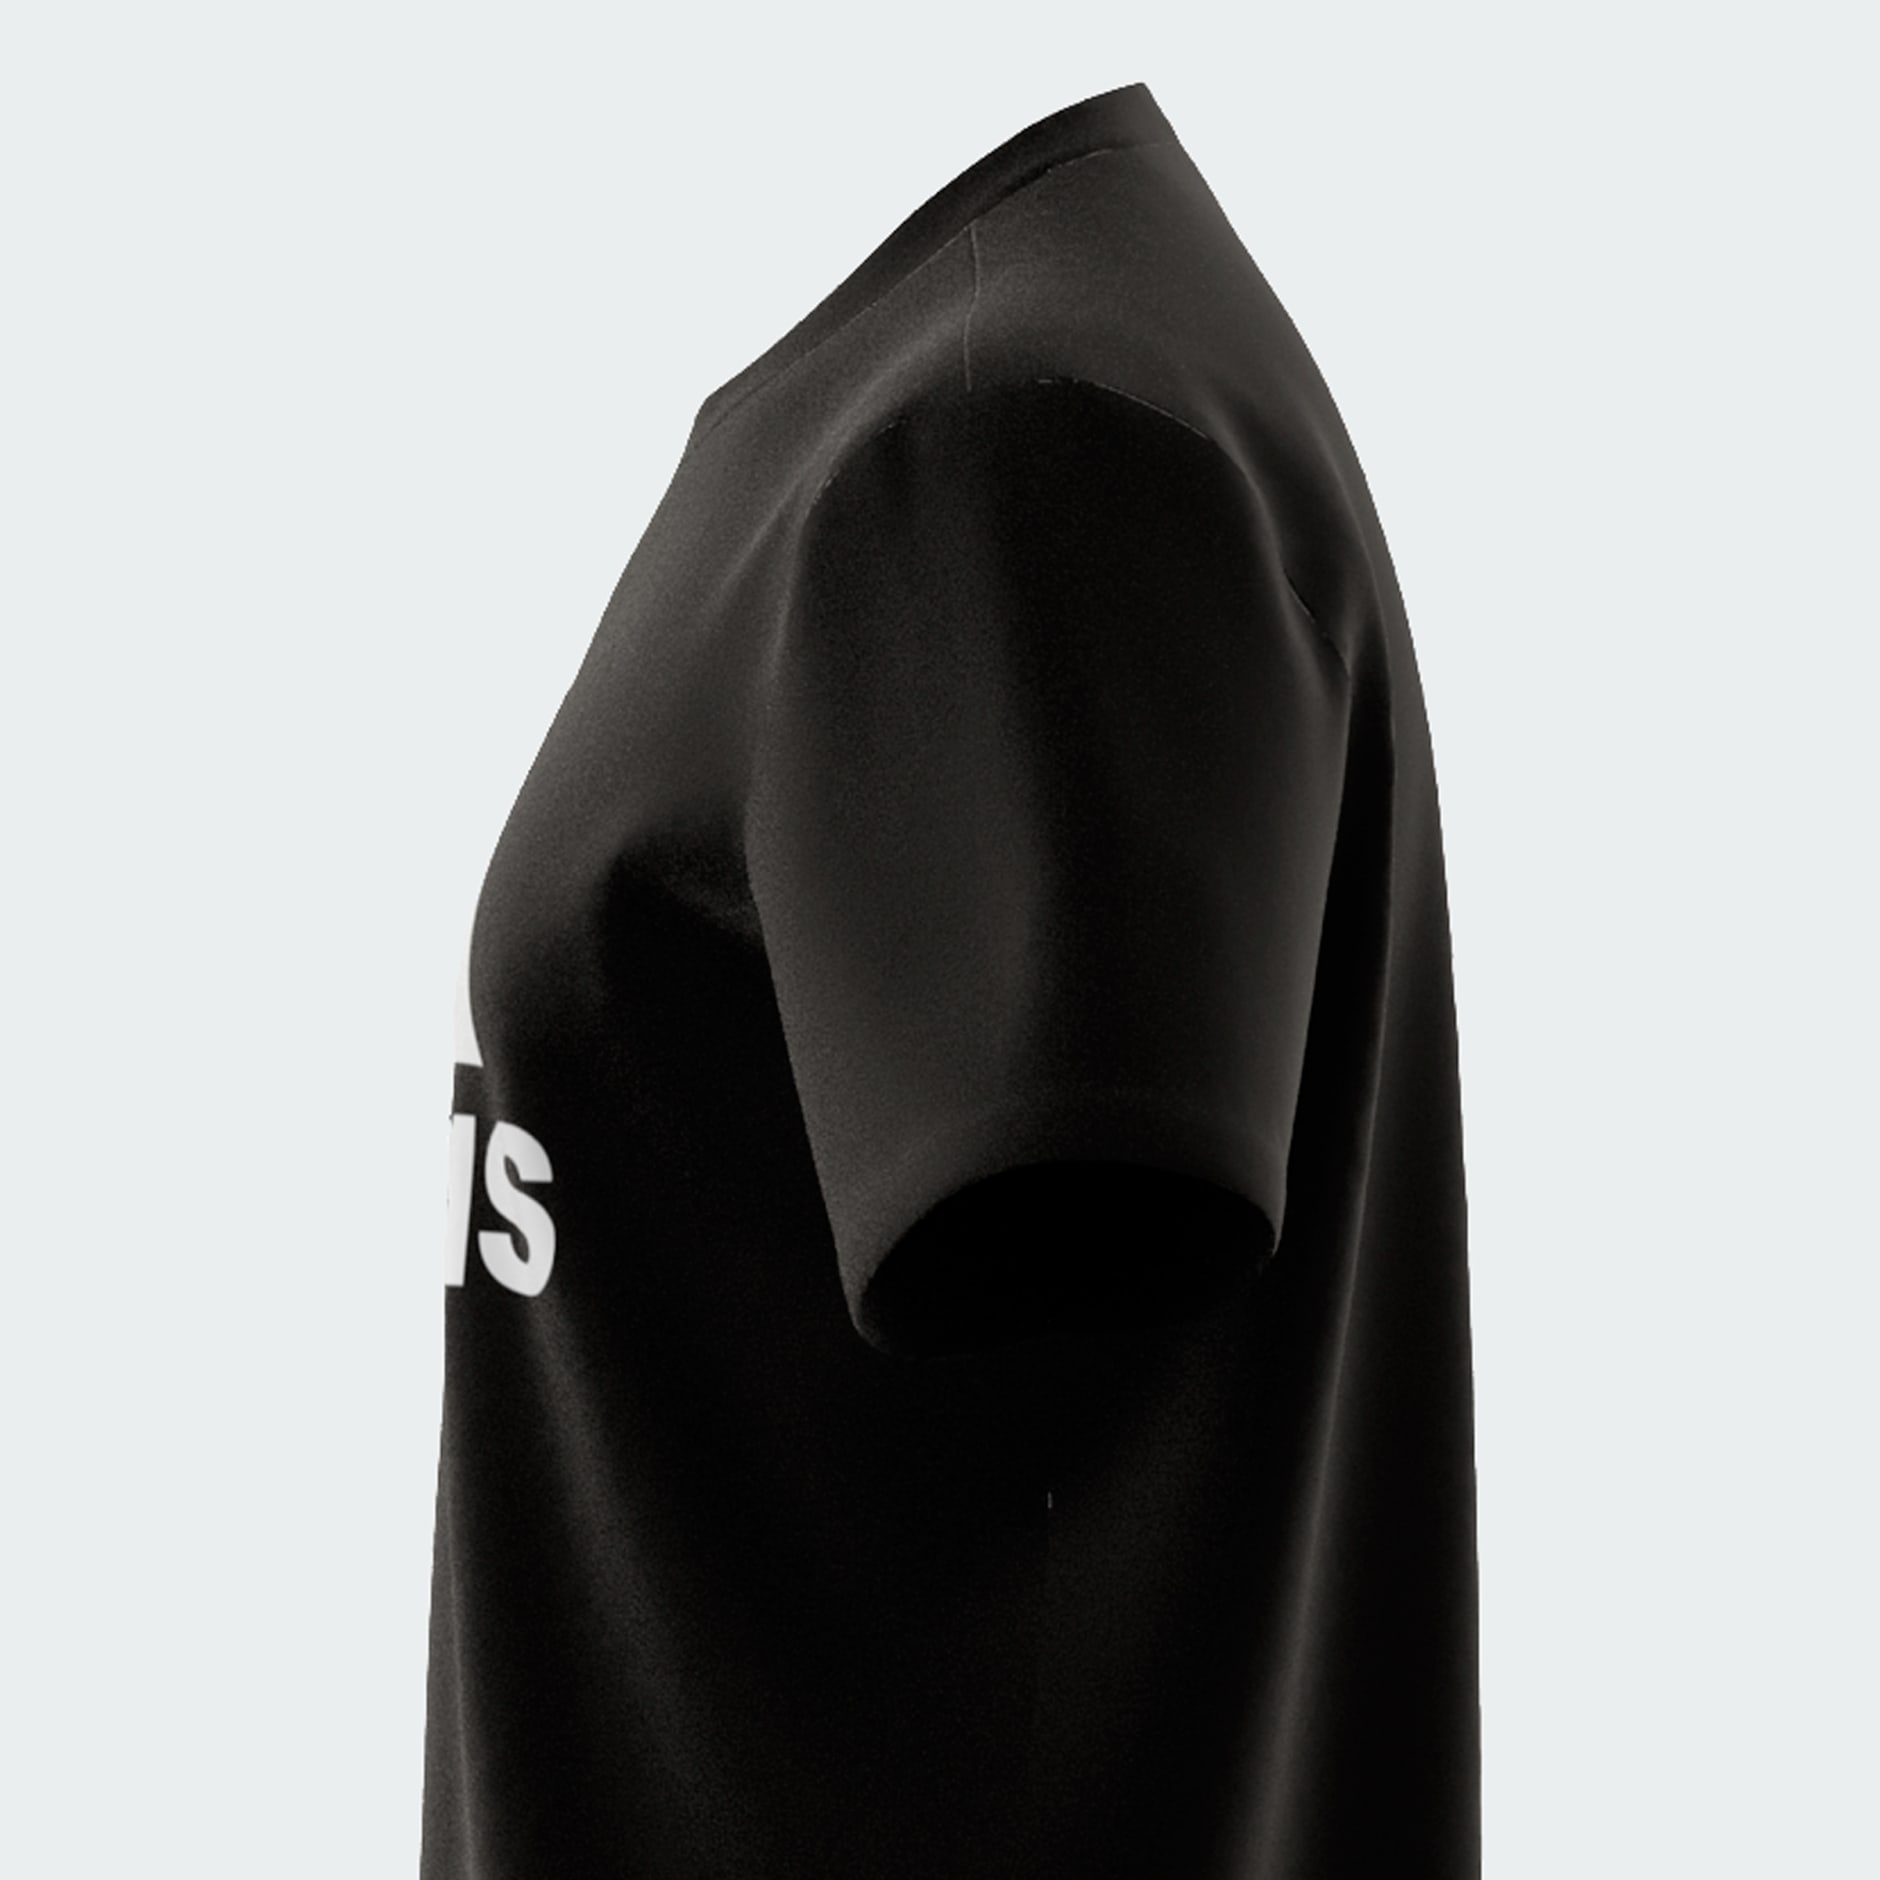 ESSENTIALS - Clothing | BIG JERSEY SINGLE South adidas LOGO Africa T-SHIRT - Black